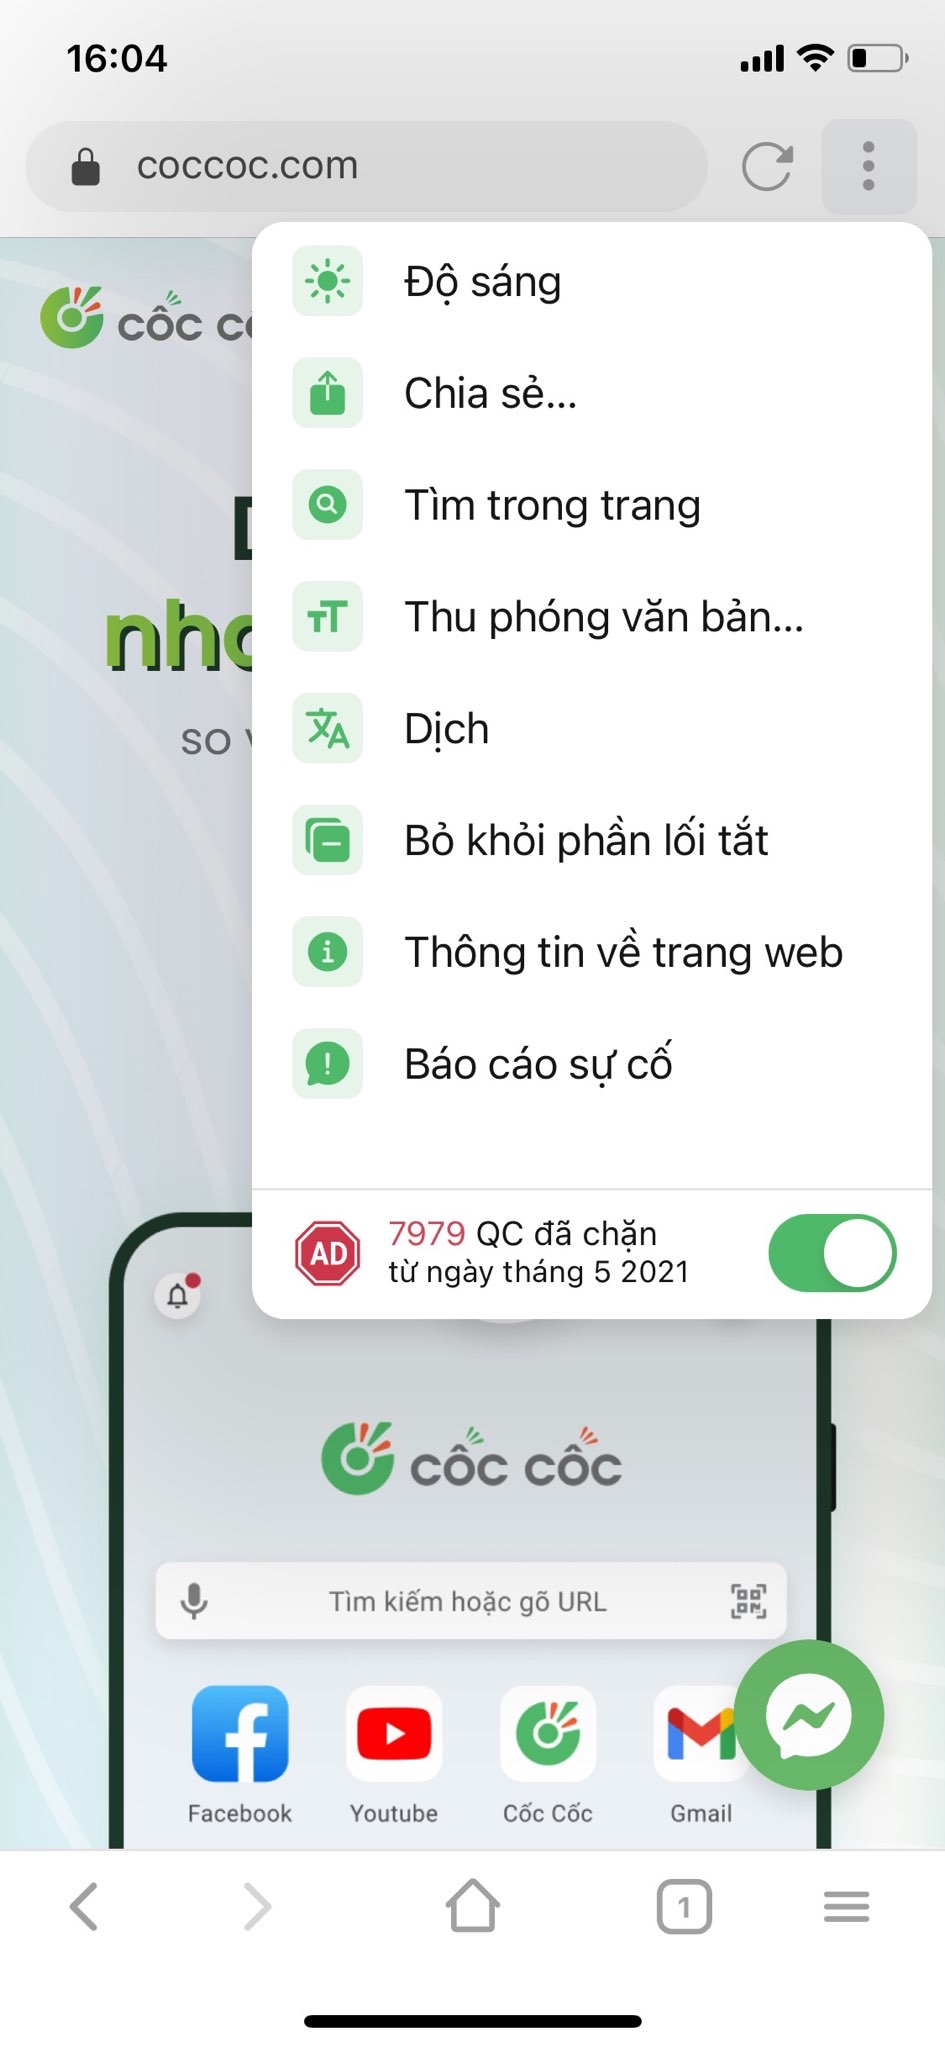 Bao cao su co tren trang web cho Coc Coc